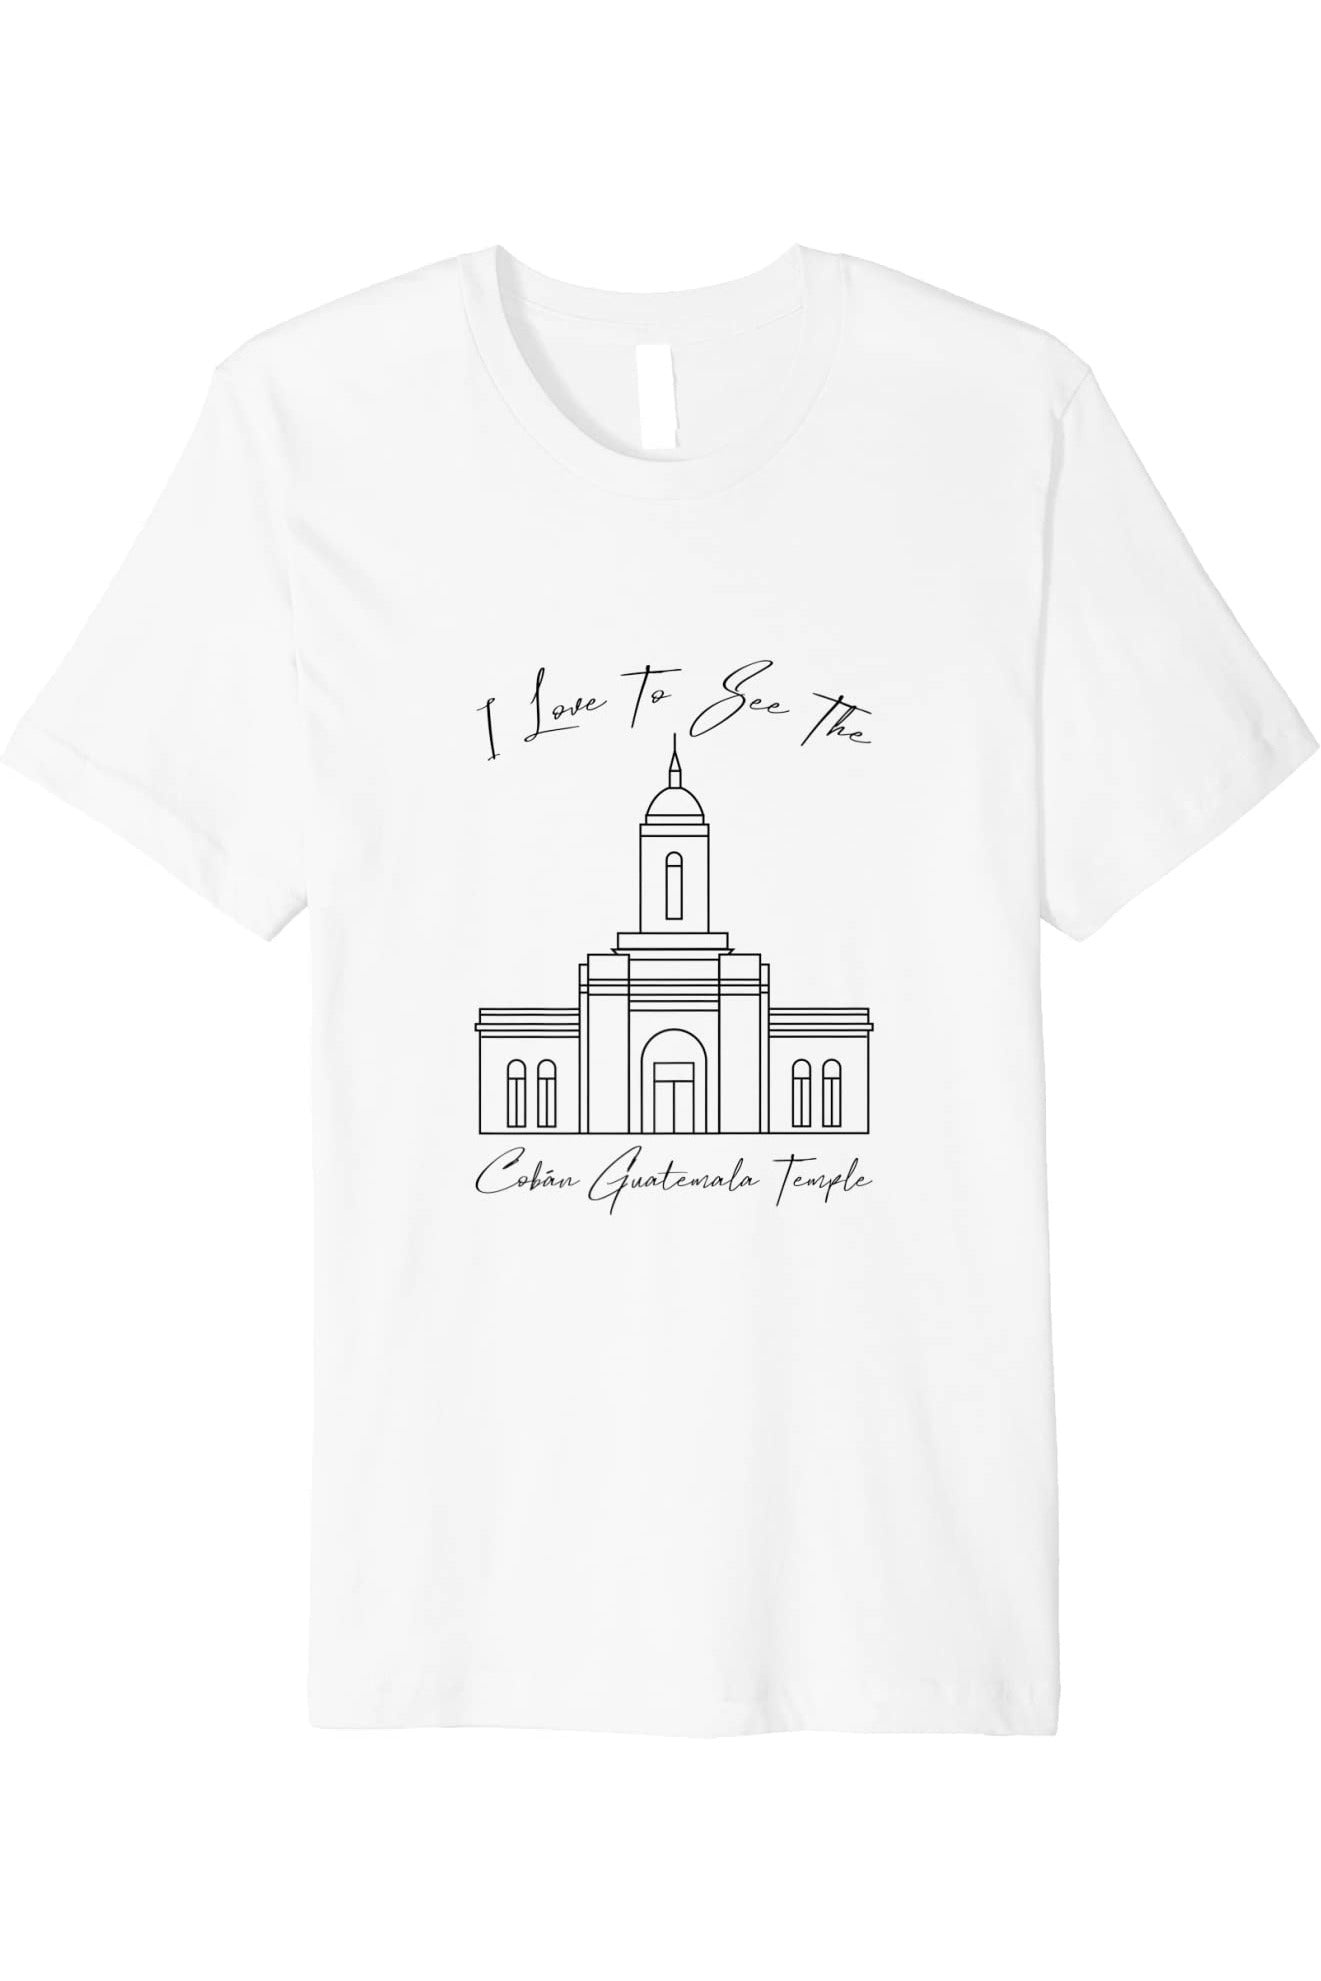 Coban Guatemala Temple T-Shirt - Premium - Calligraphy Style (English) US